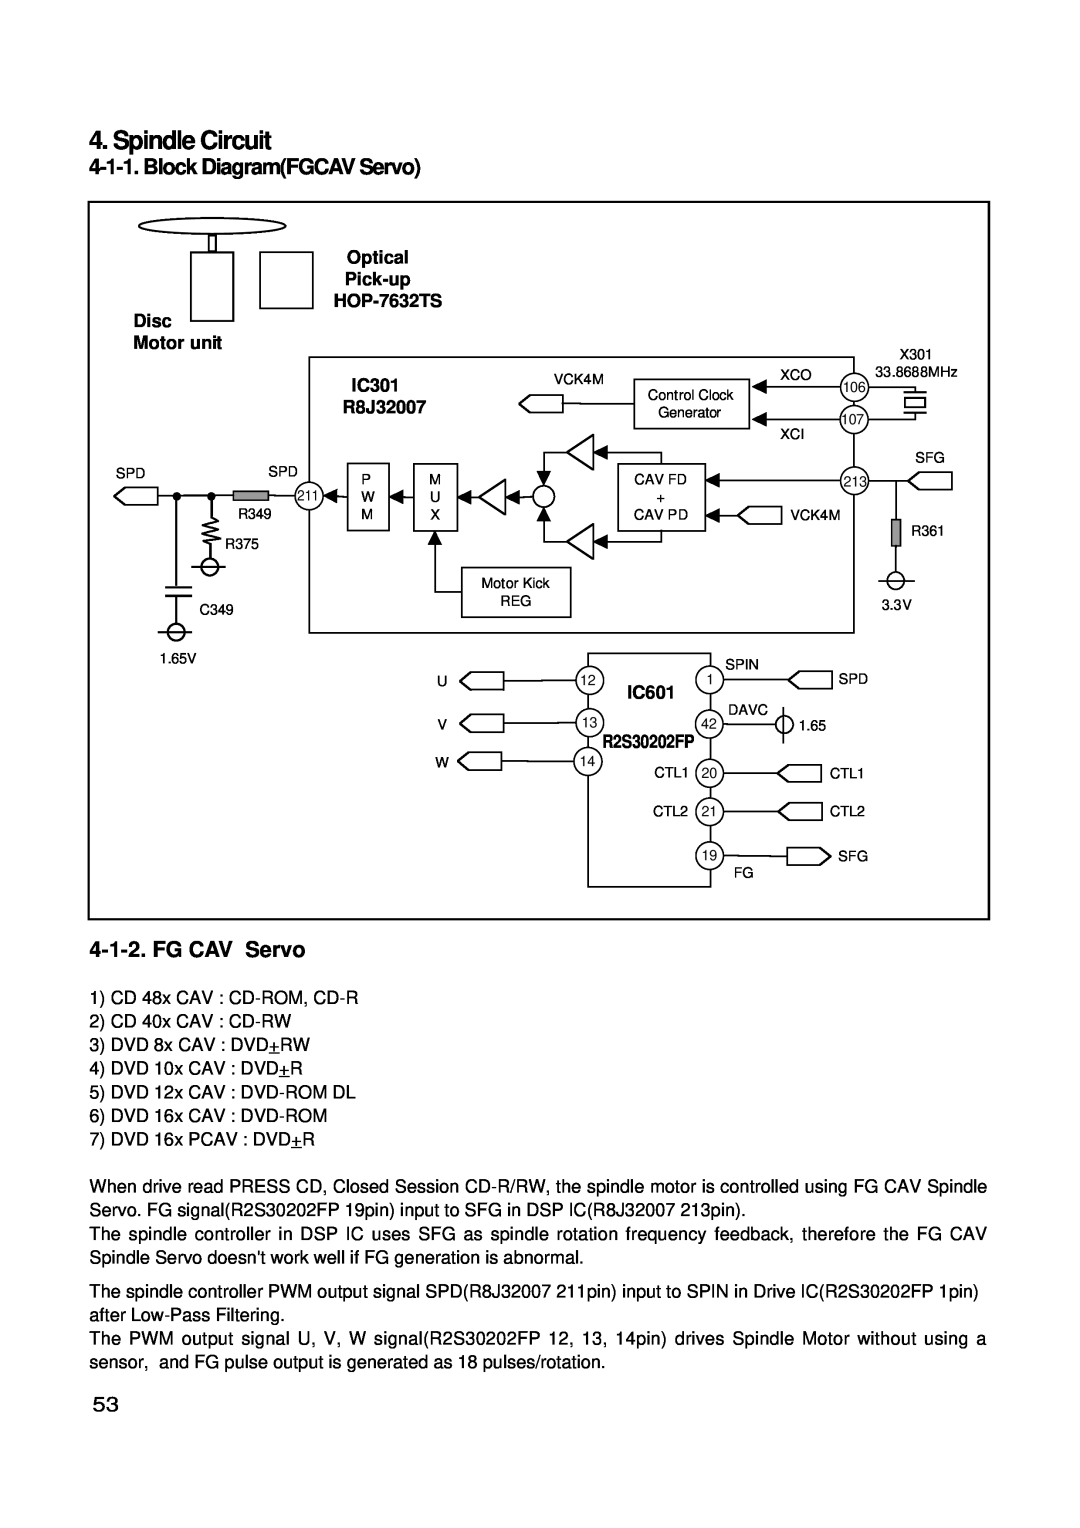 LG Electronics GSA-4165B Spindle Circuit, Block DiagramFGCAV Servo, Optical, Pick-up, Disc, HOP-7632TS, Motor unit, IC301 